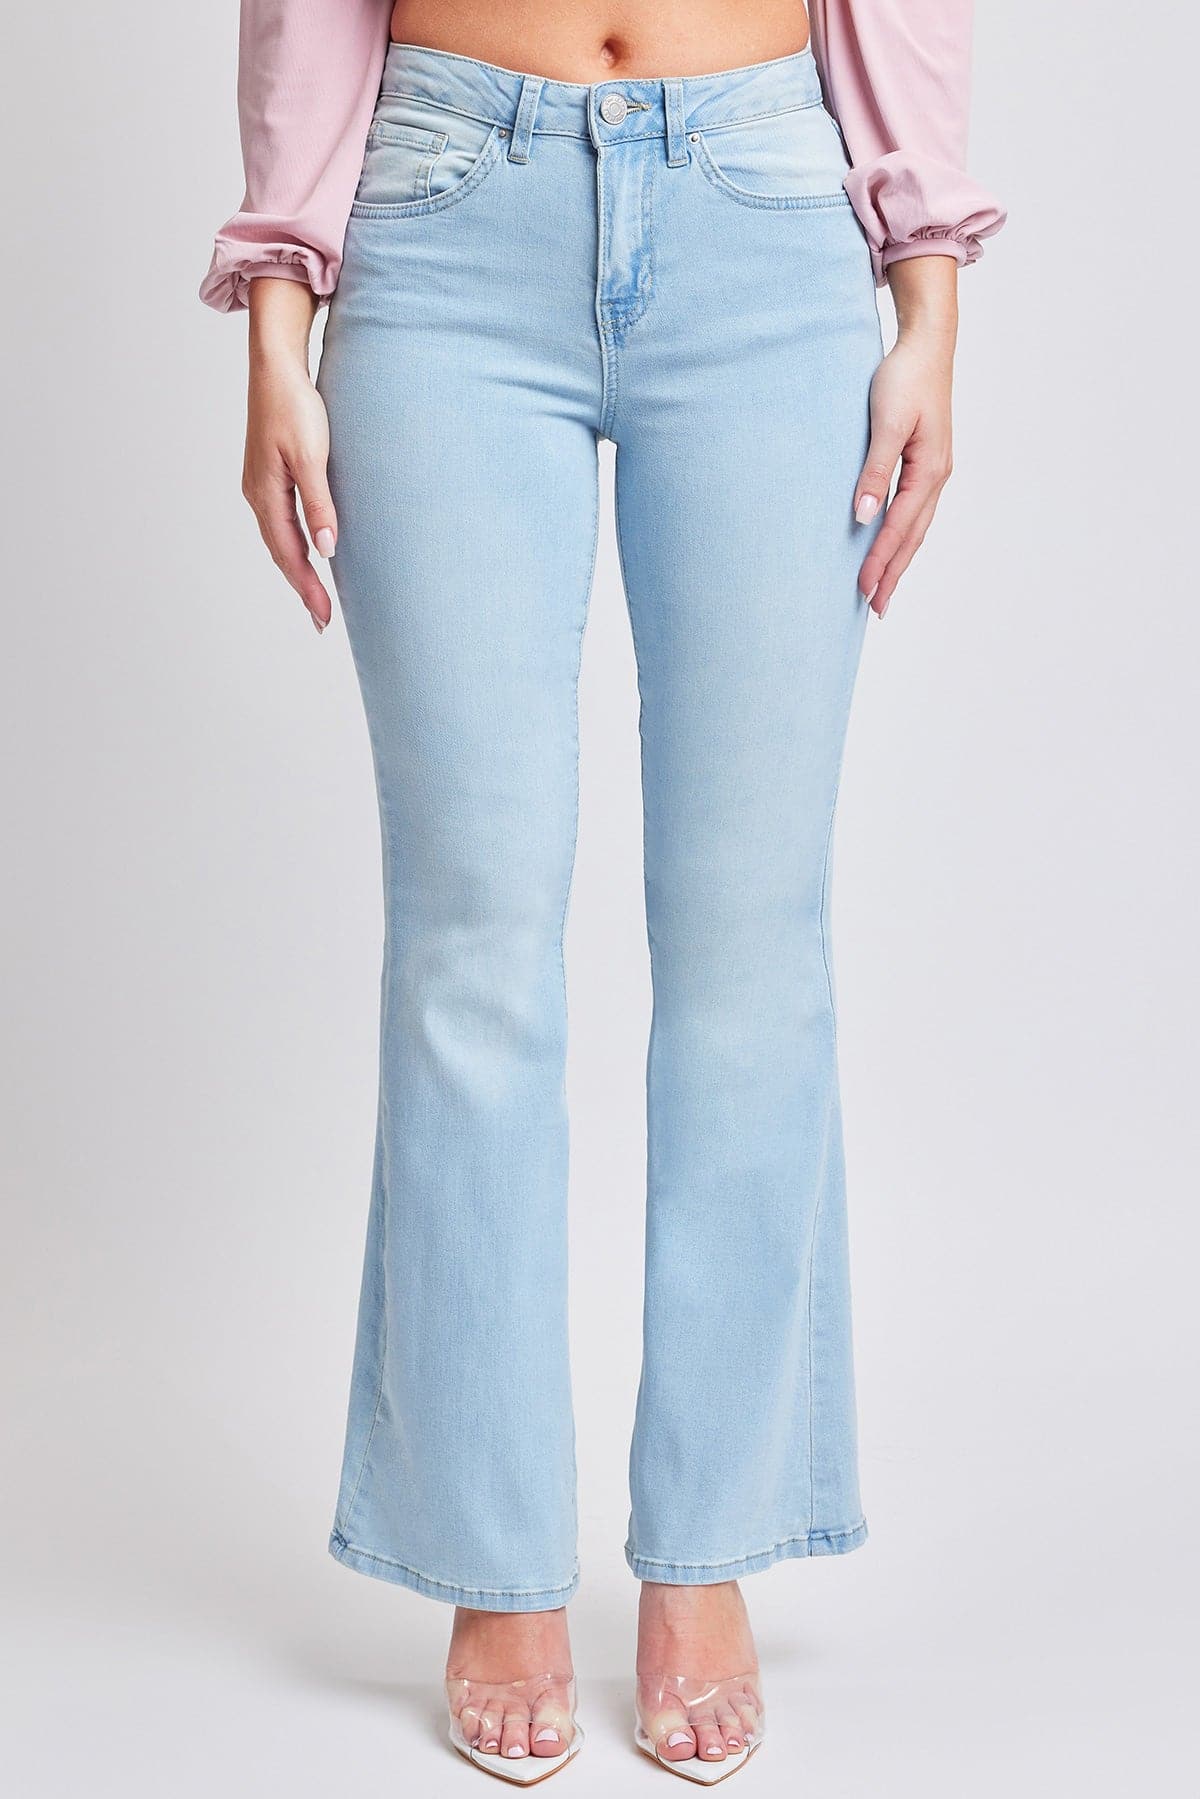 Women's Essential Flare Jeans - Regular Inseam